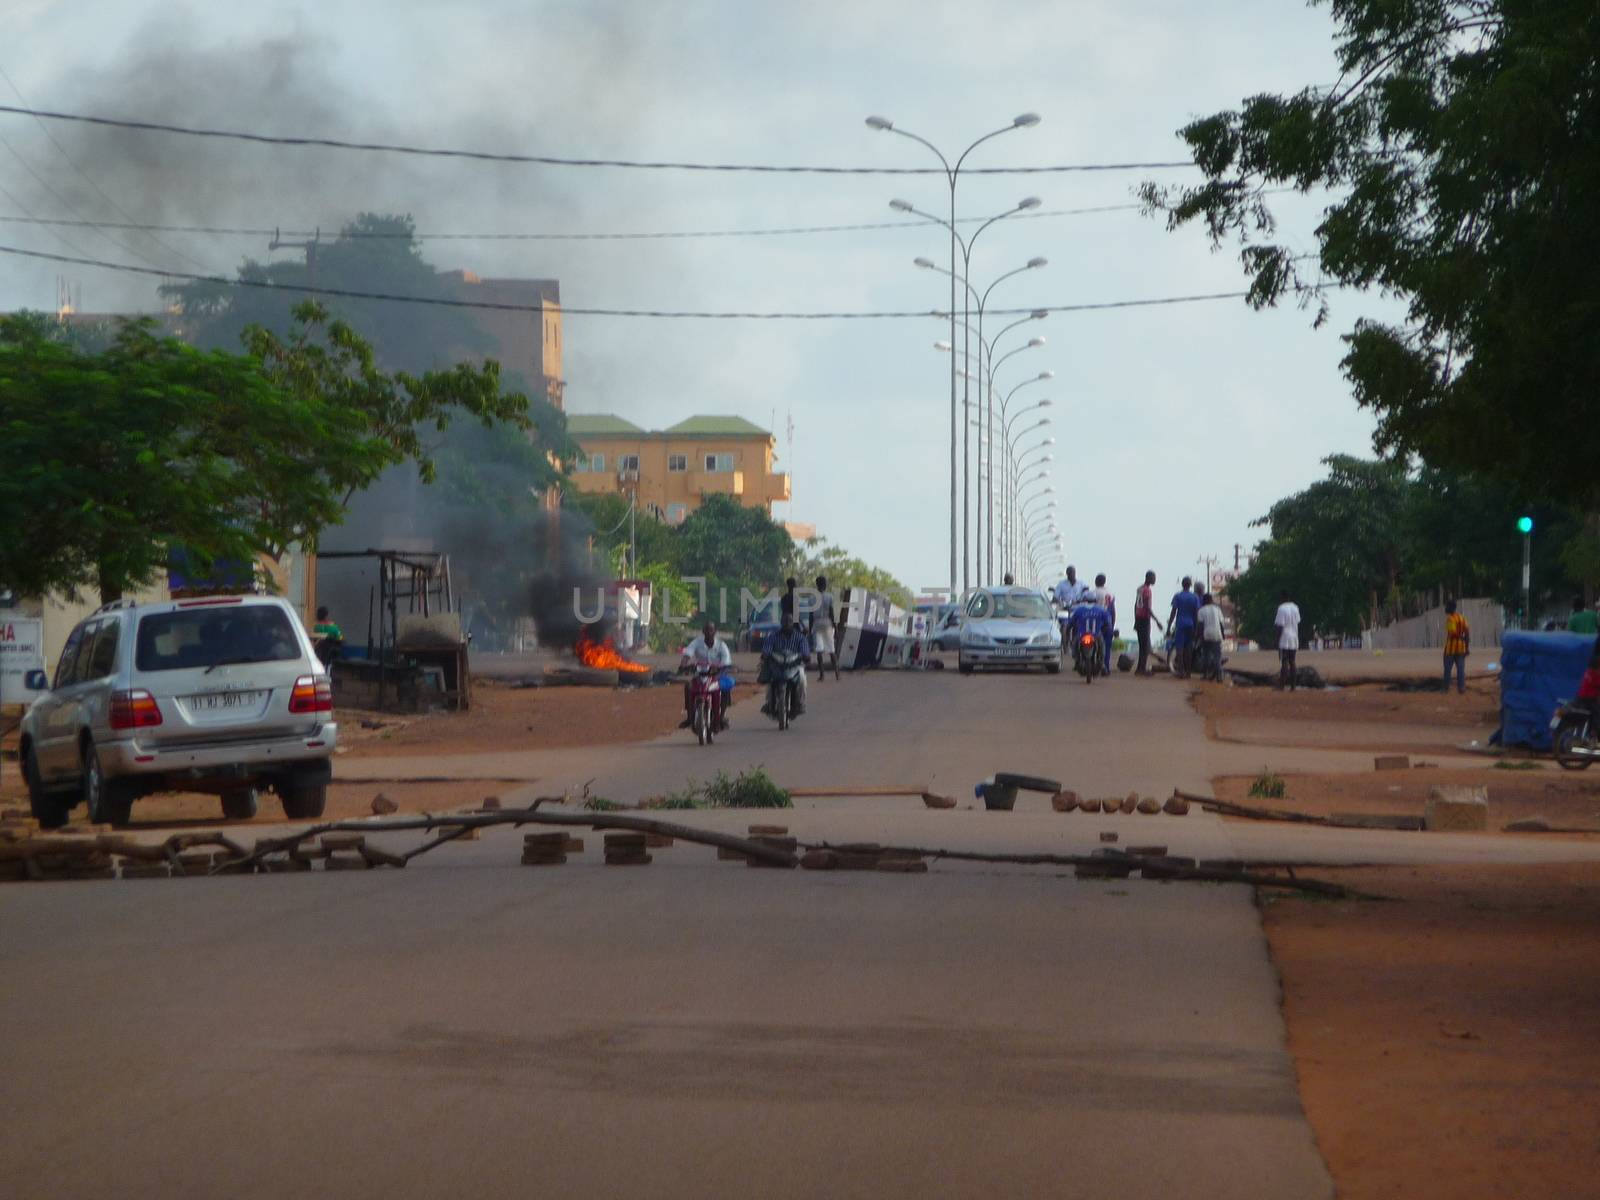 BURKINA FASO - POLITICS - MILITARY - PROTEST by newzulu